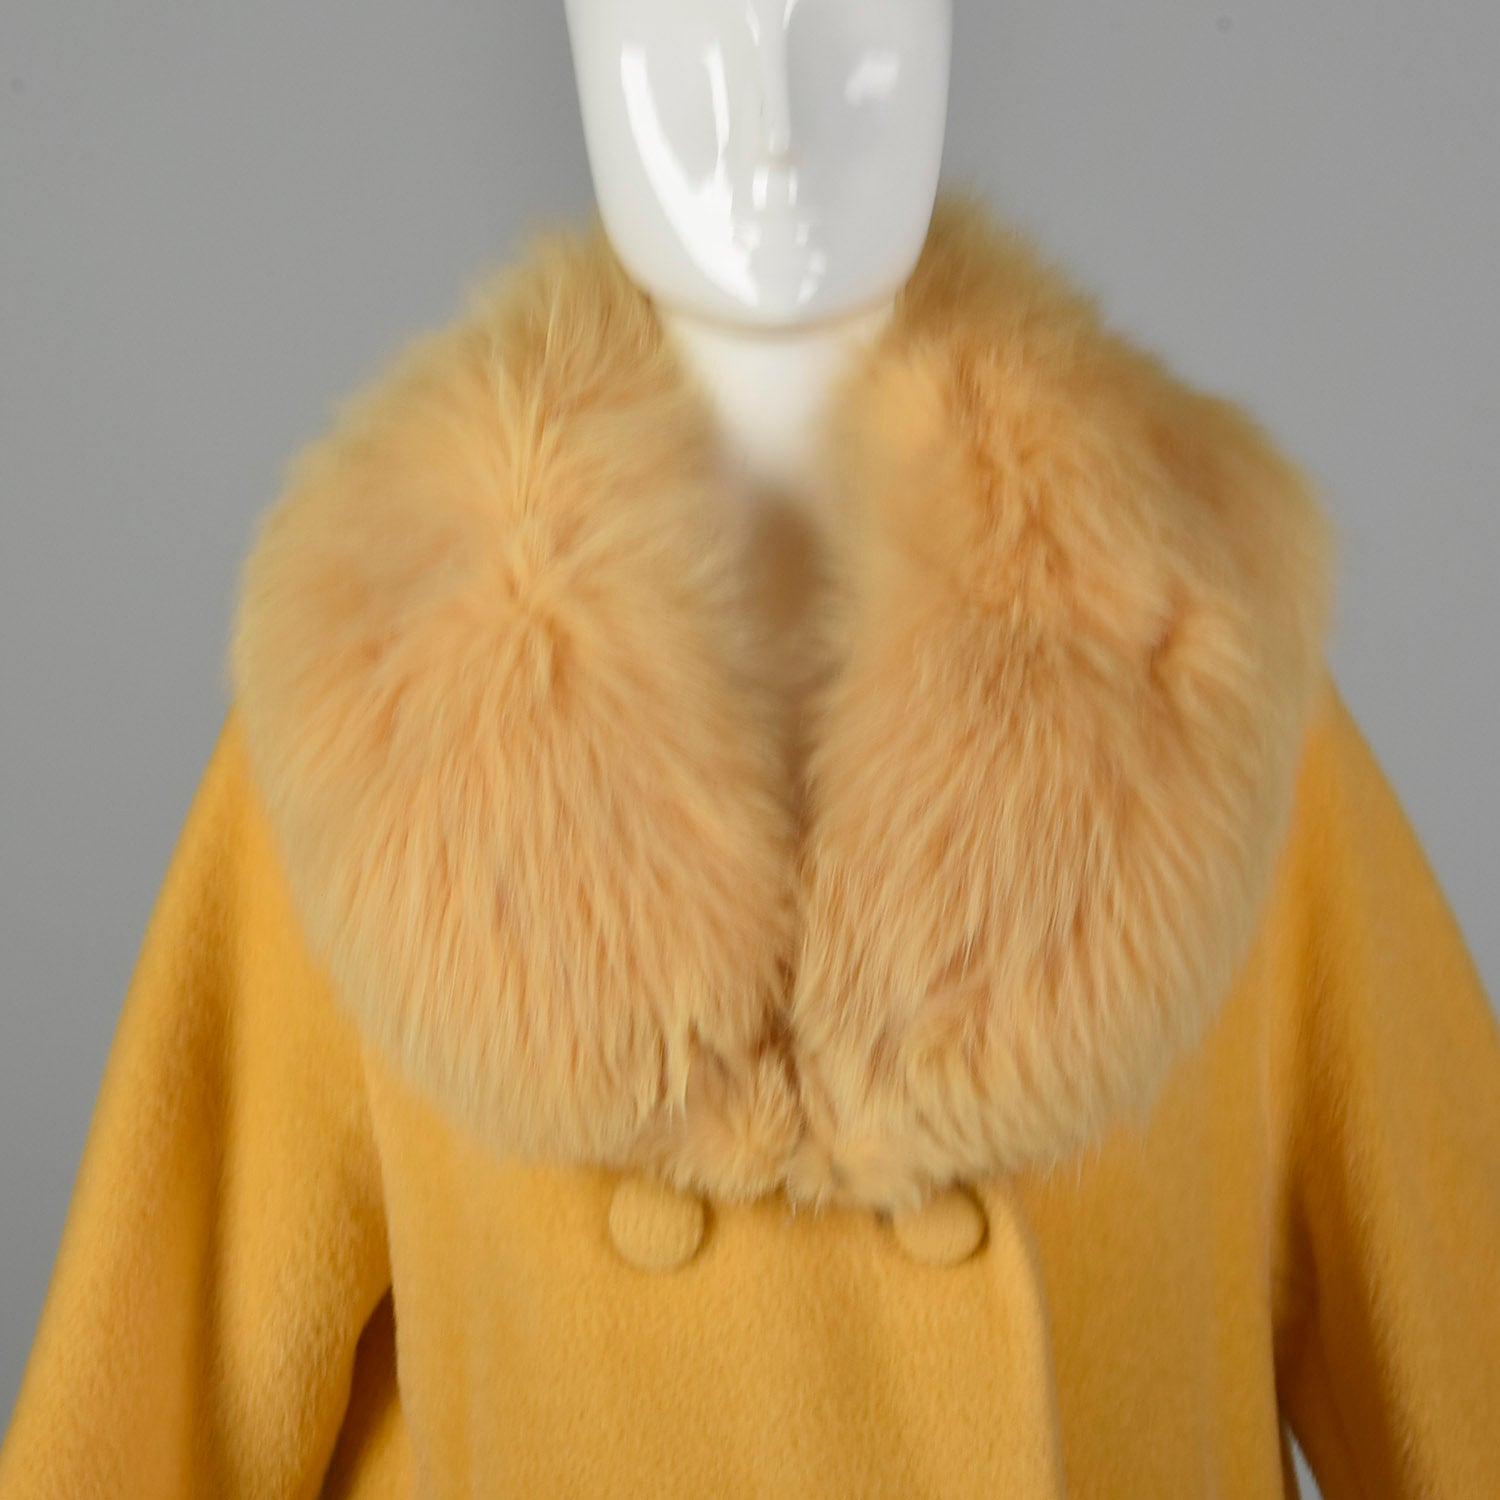 Medium 1950s Lilli Ann Yellow Winter Coat